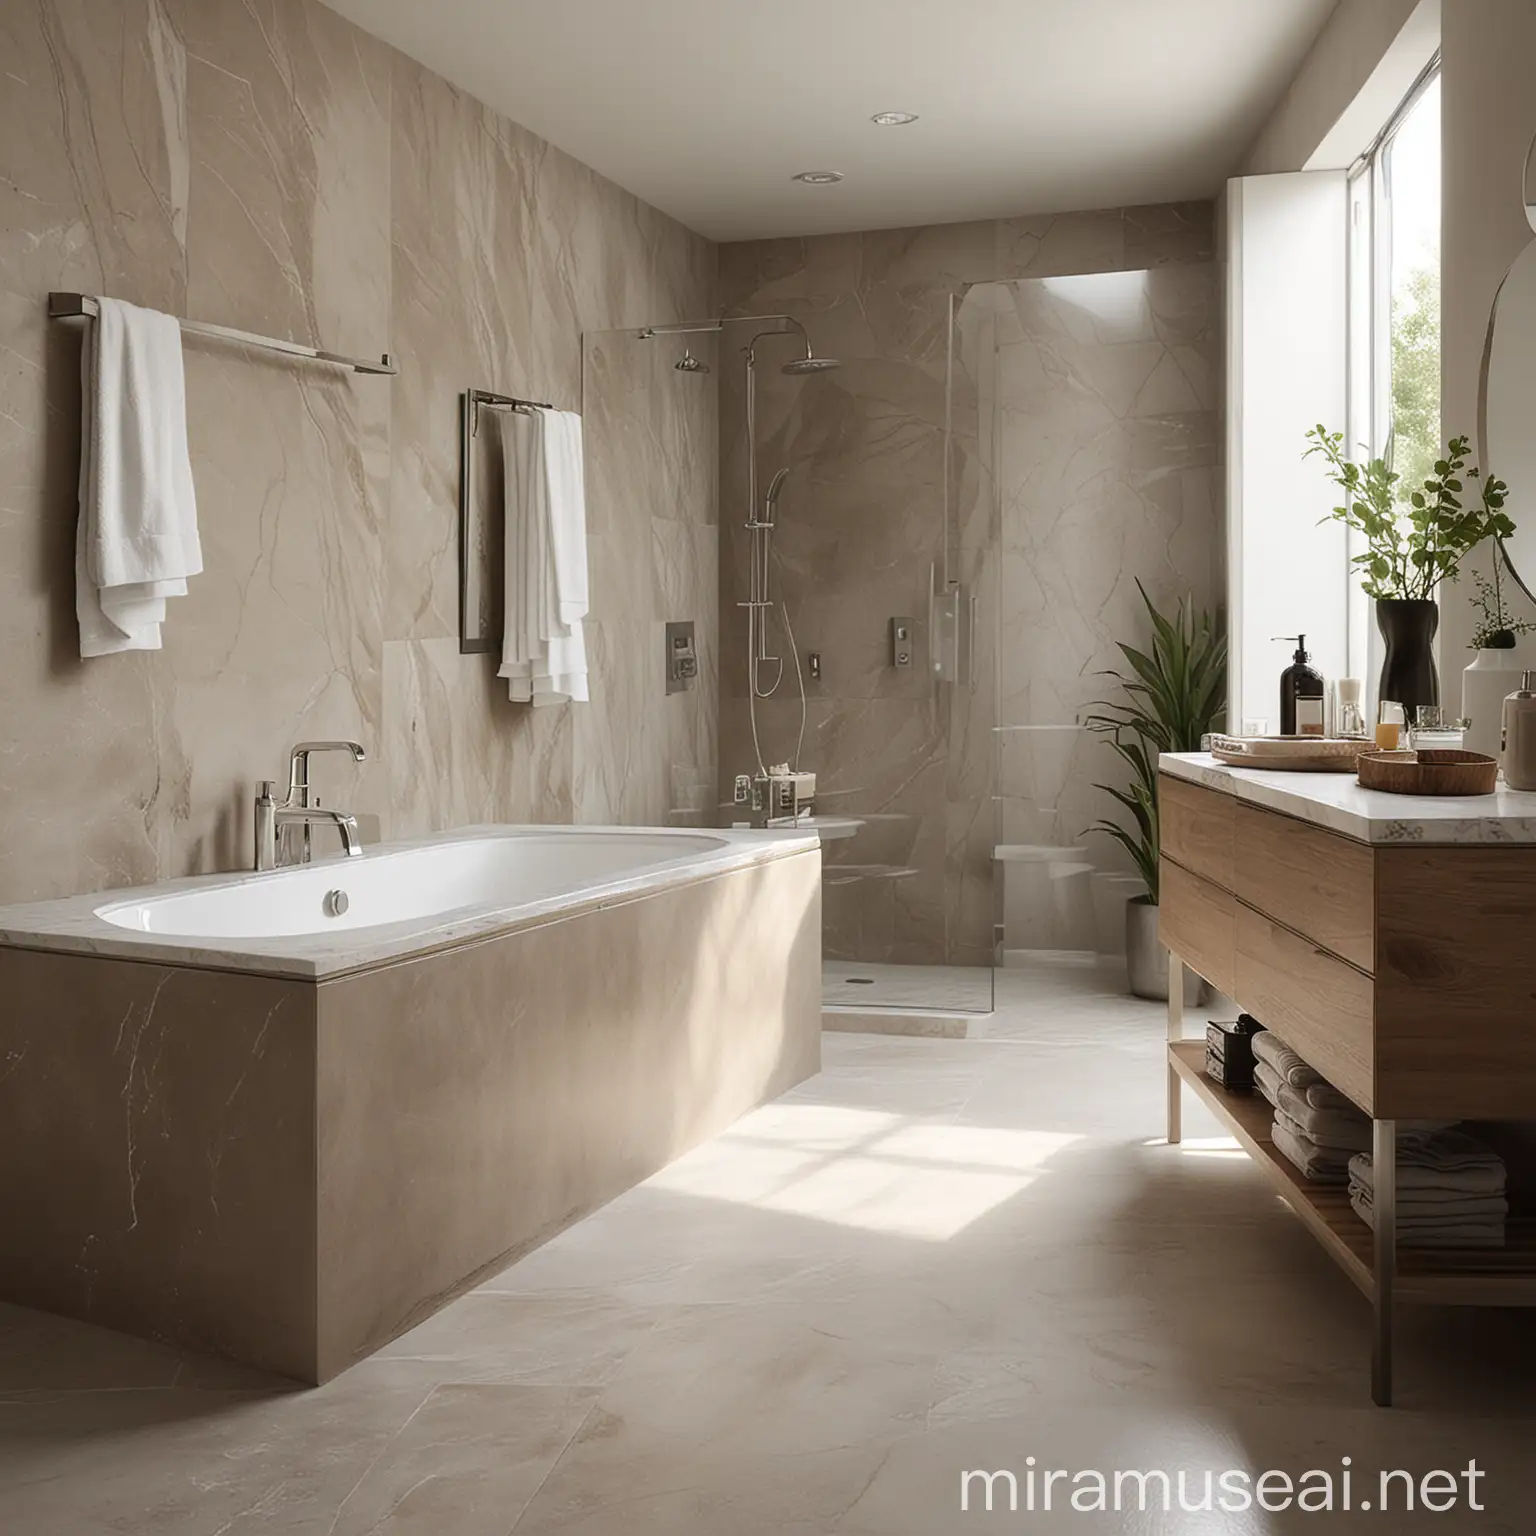 Luxurious SpaInspired Bathroom Interior with Freestanding Marble Bathtub